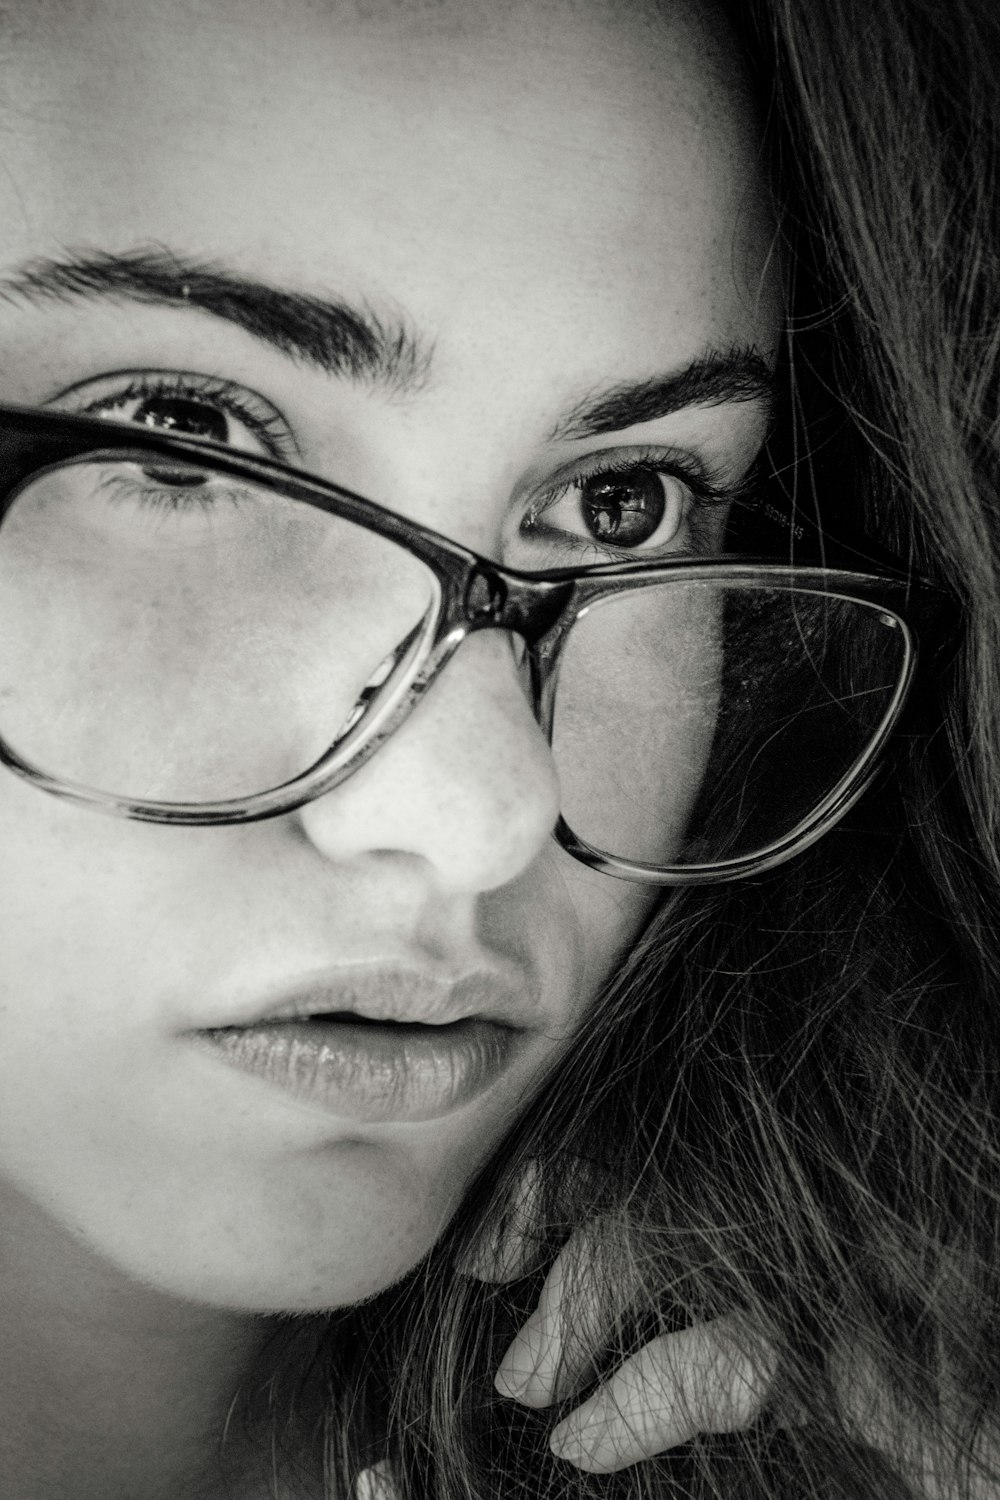 woman wearing eyeglasses grayscale photo